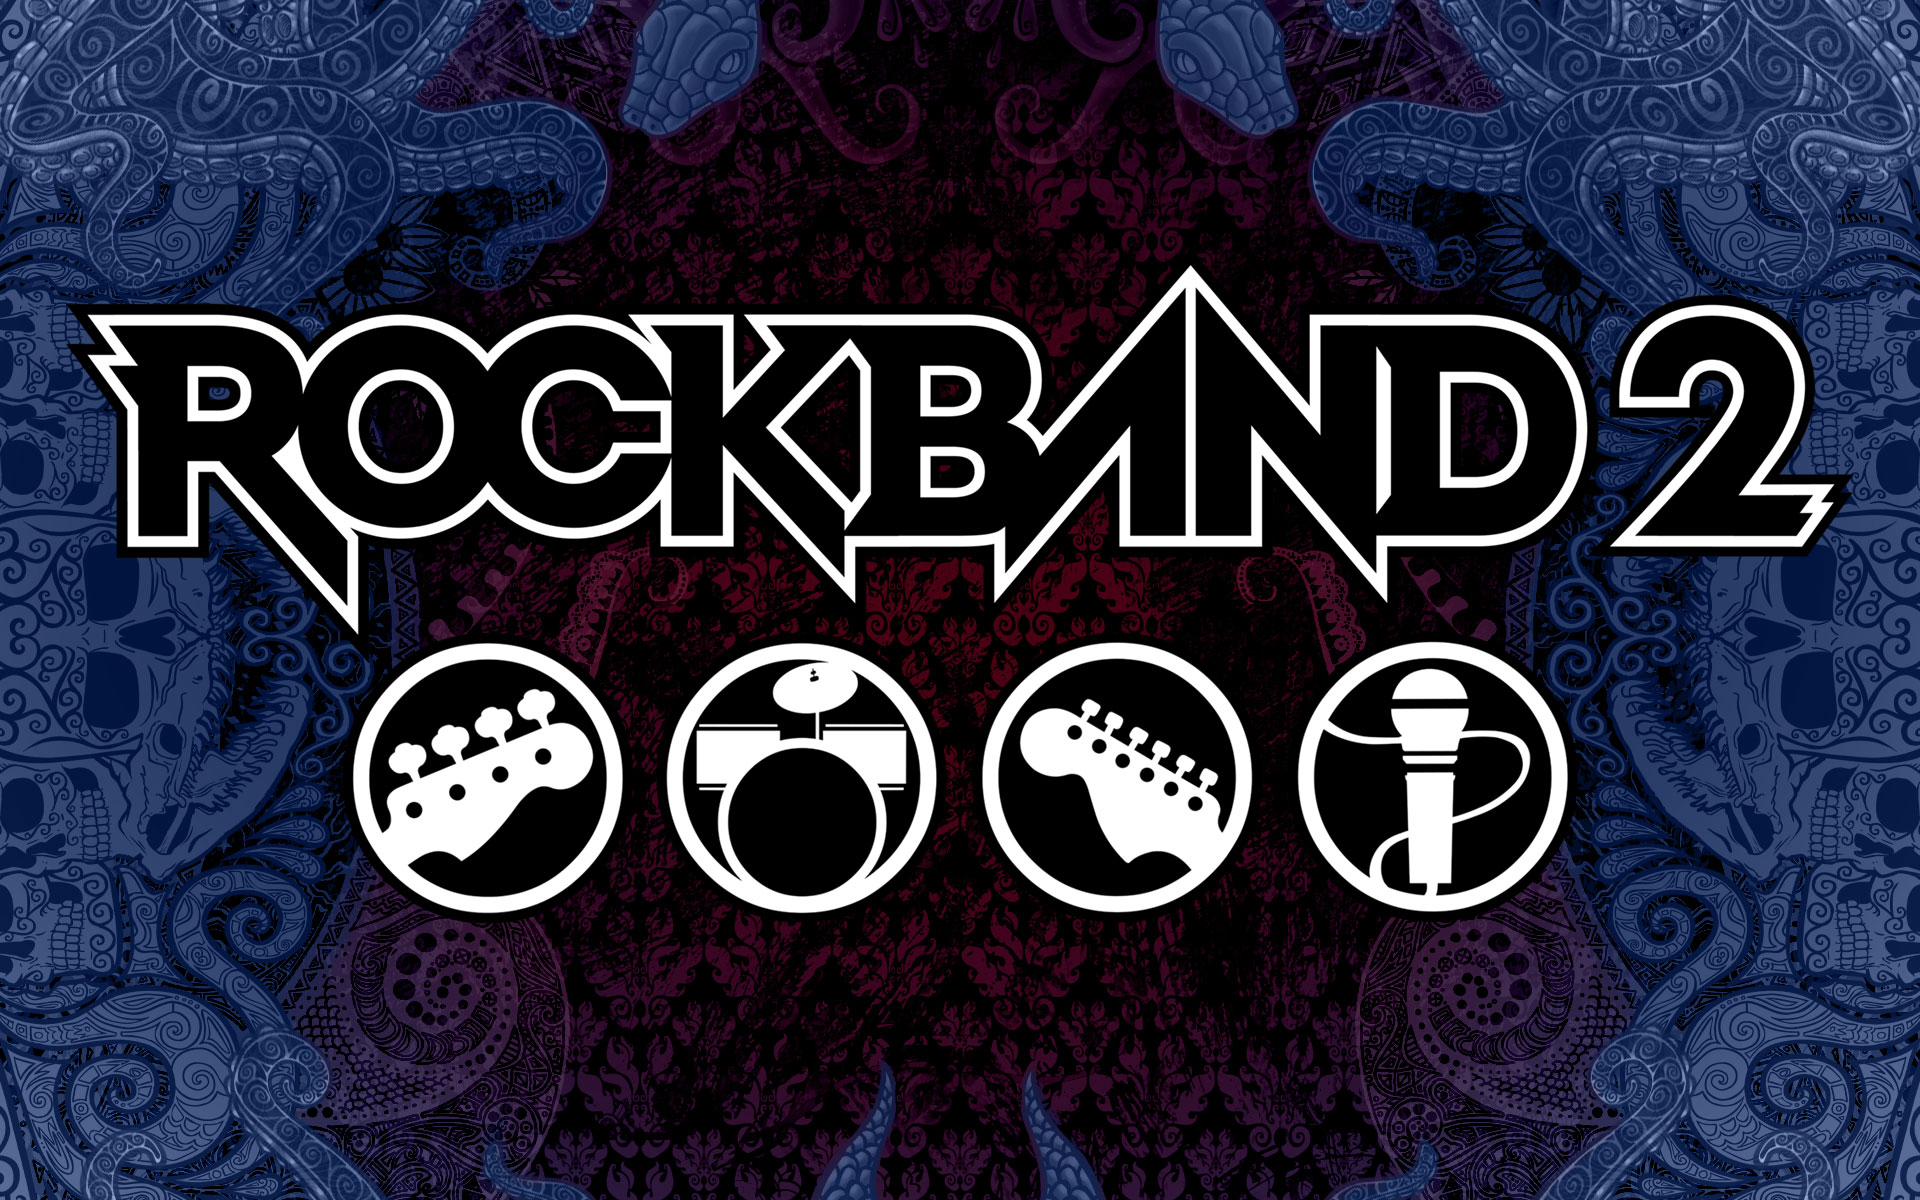 Rock Band Wallpaper HD 